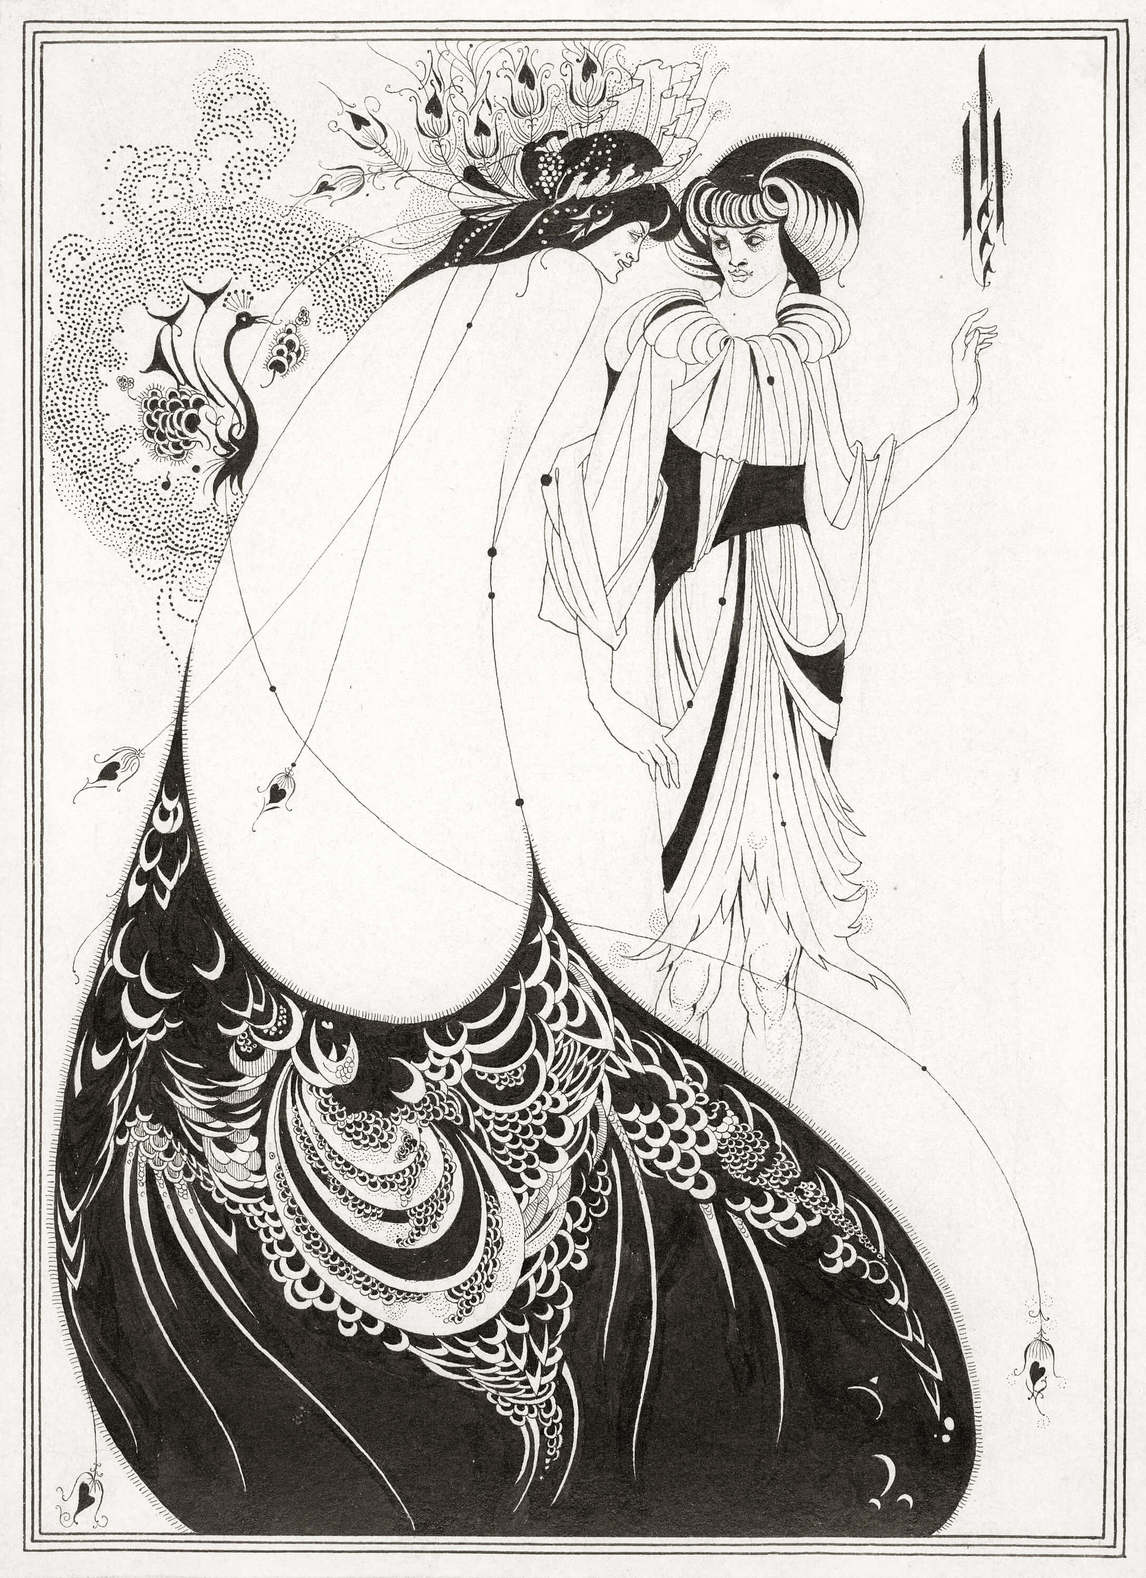 Aubrey Beardsley, The Peacock Skirt, 1893